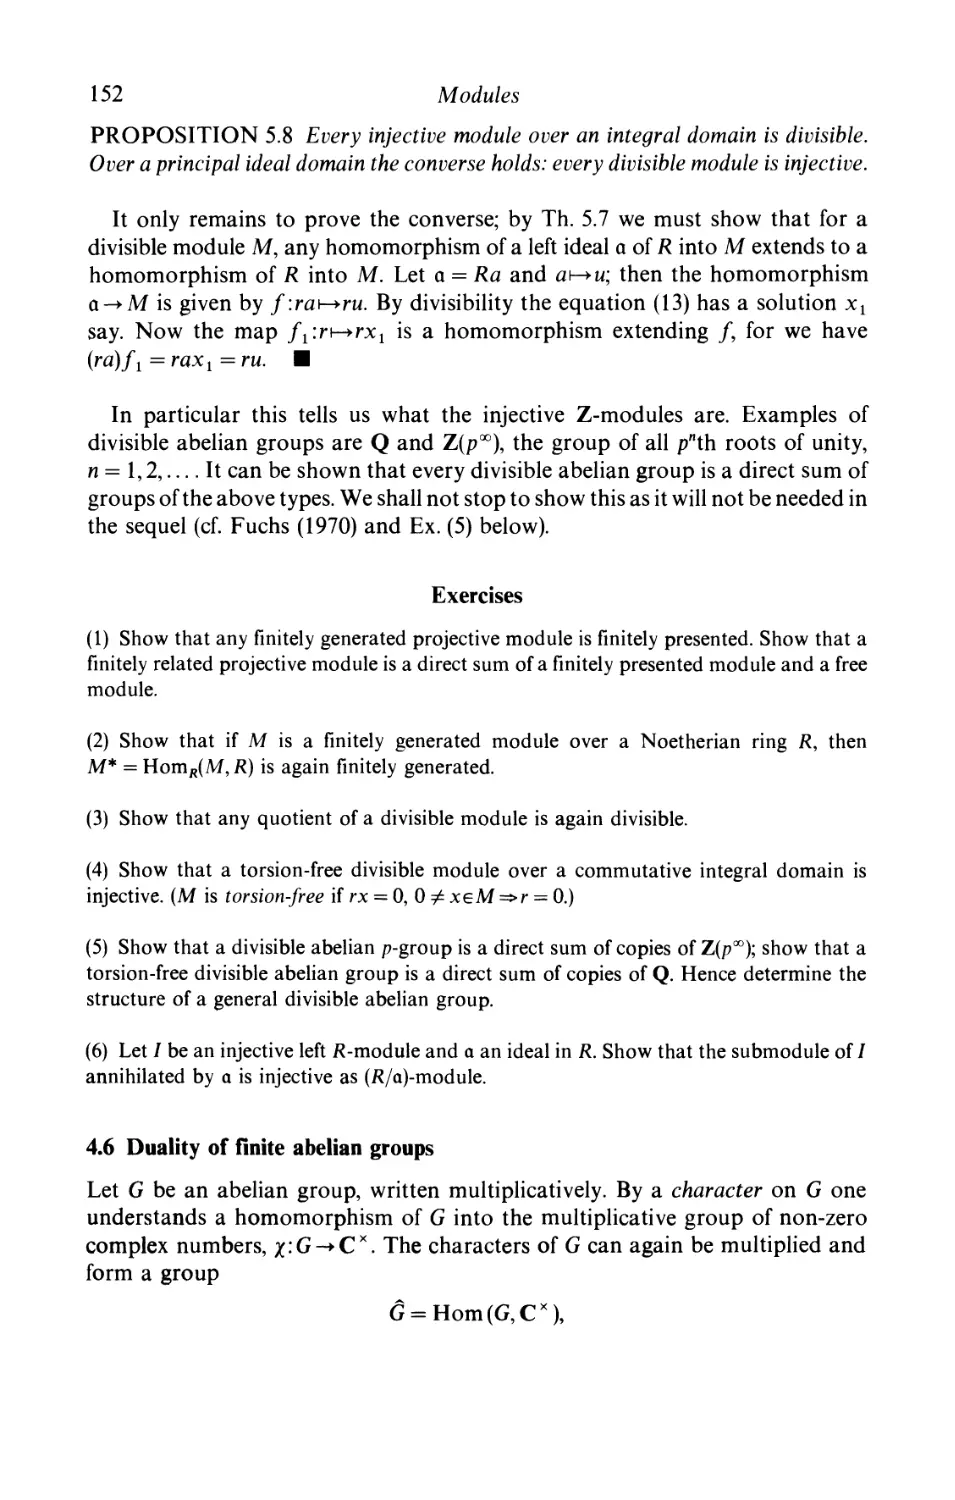 4.6 Duality of finite abelian groups